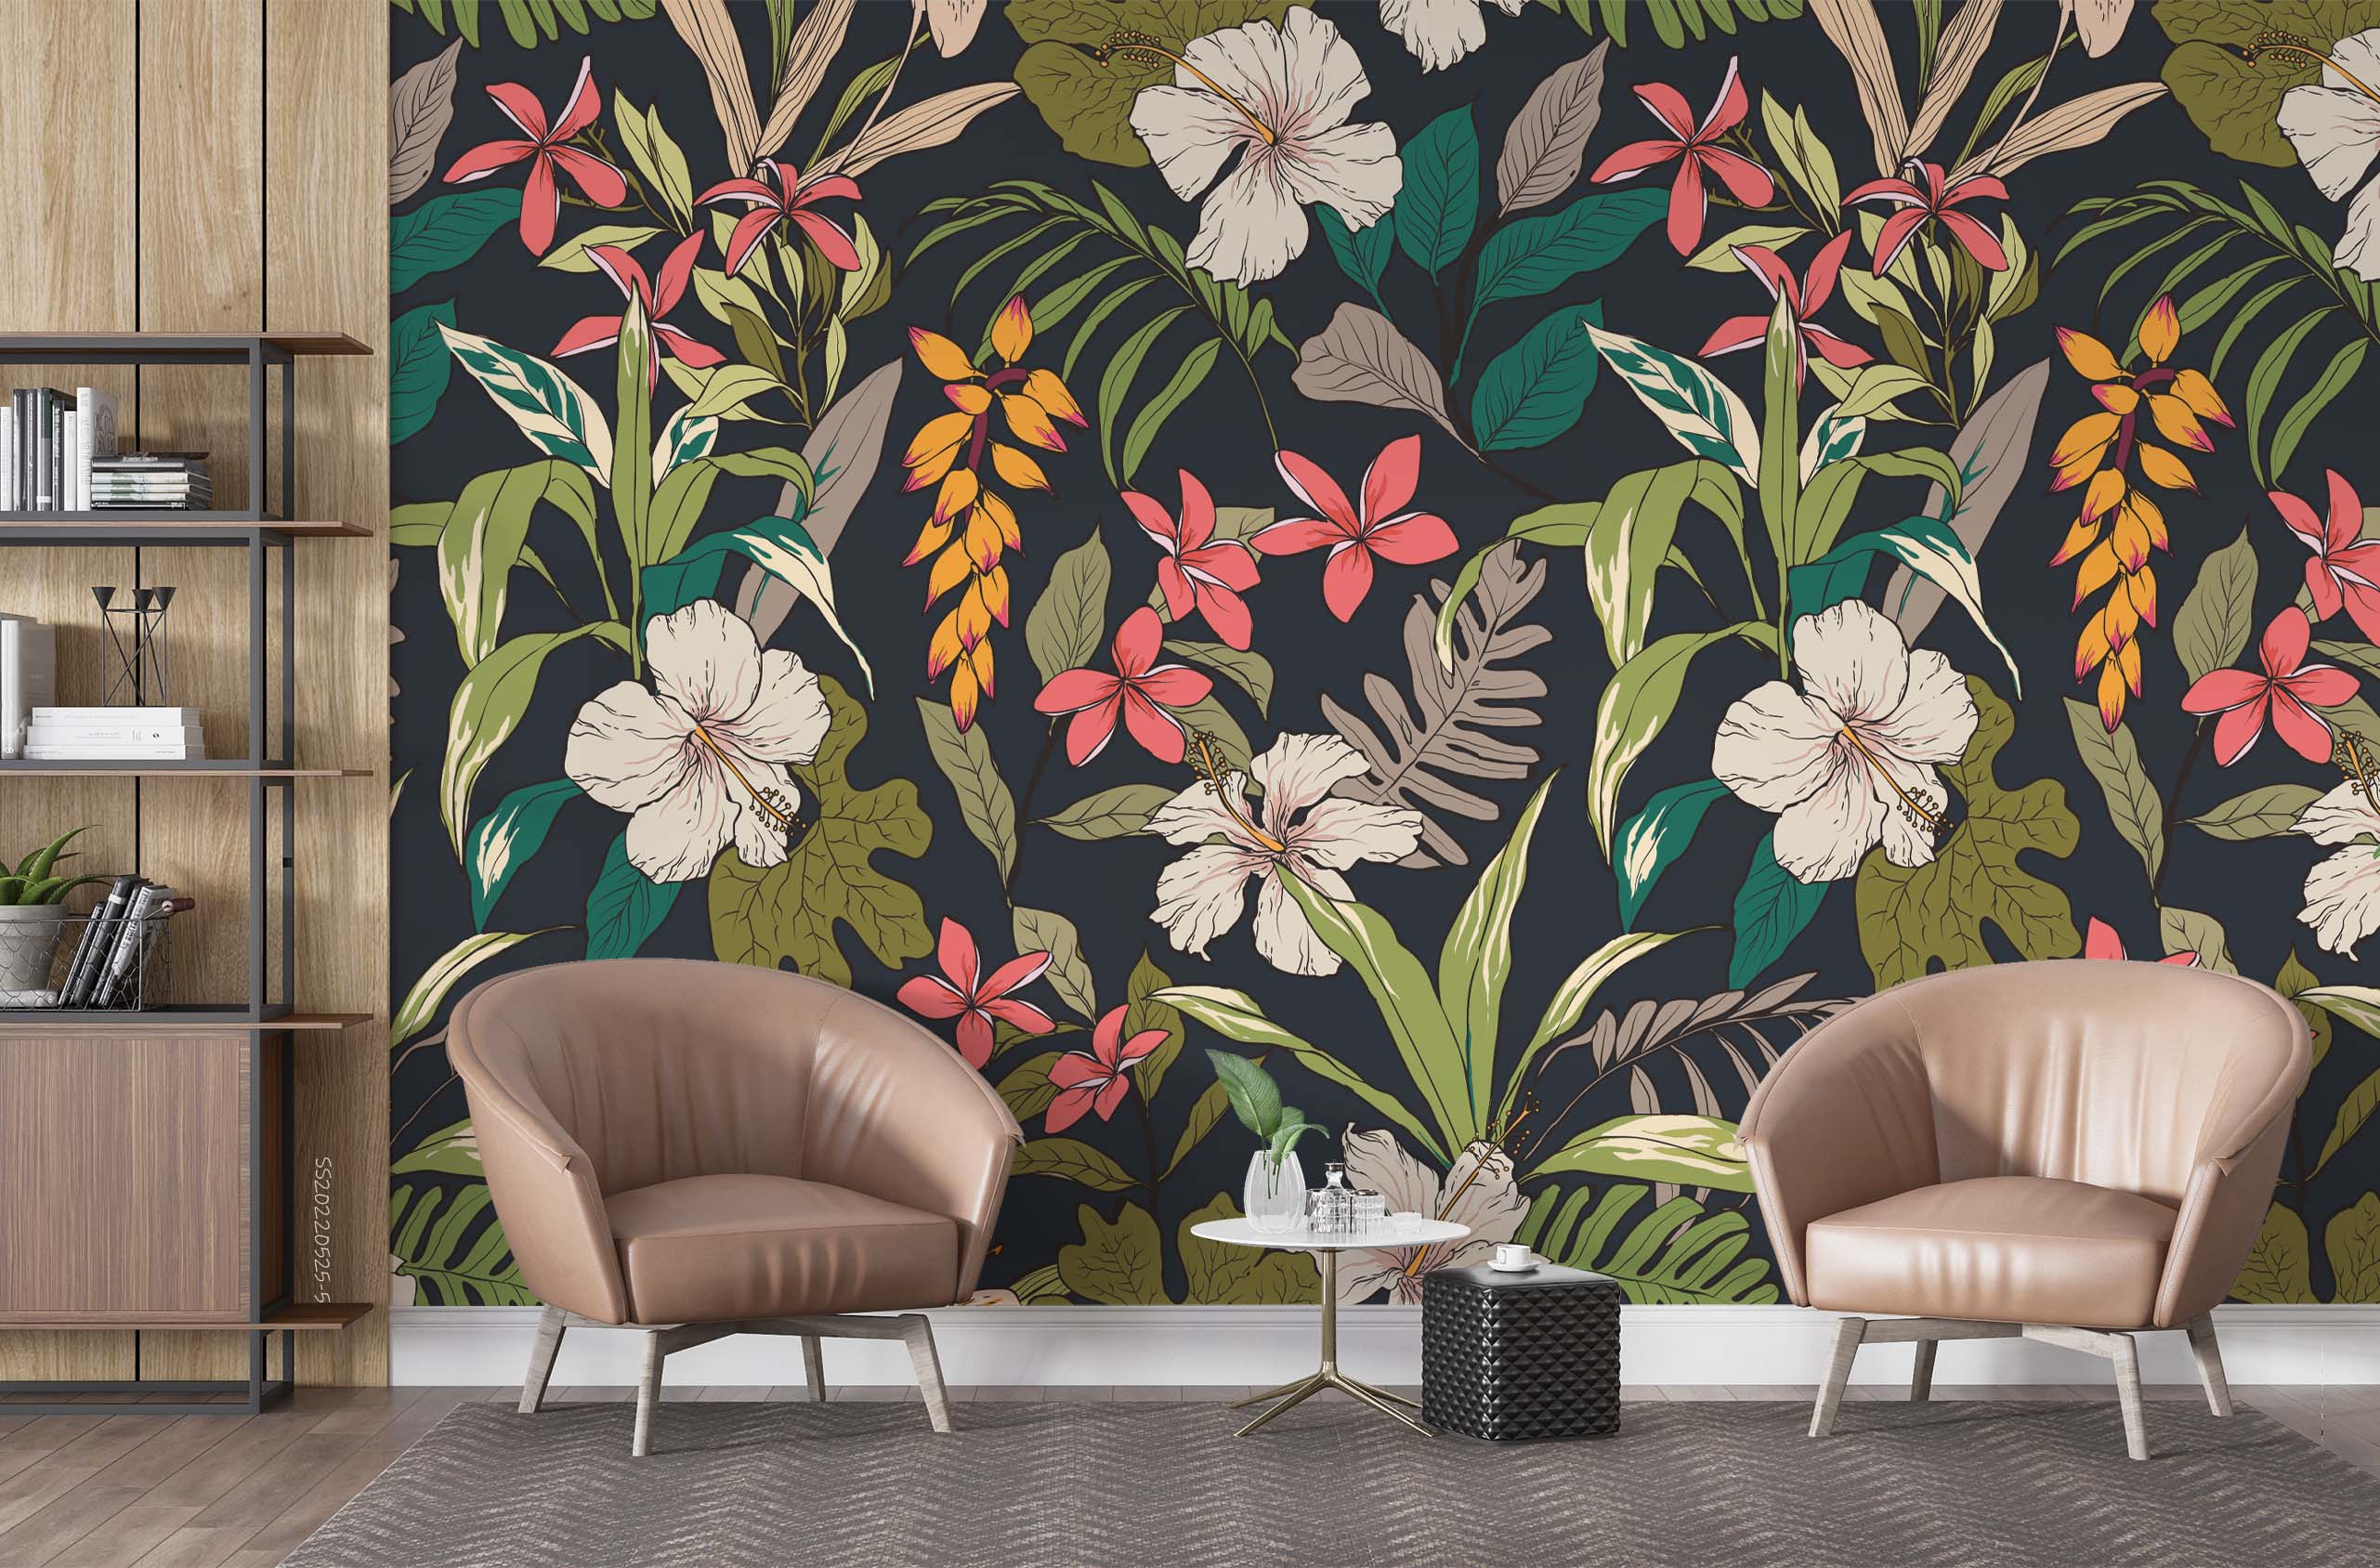 3D Vintage Tropical Leaves Floral Wall Mural Wallpaper GD 996- Jess Art Decoration